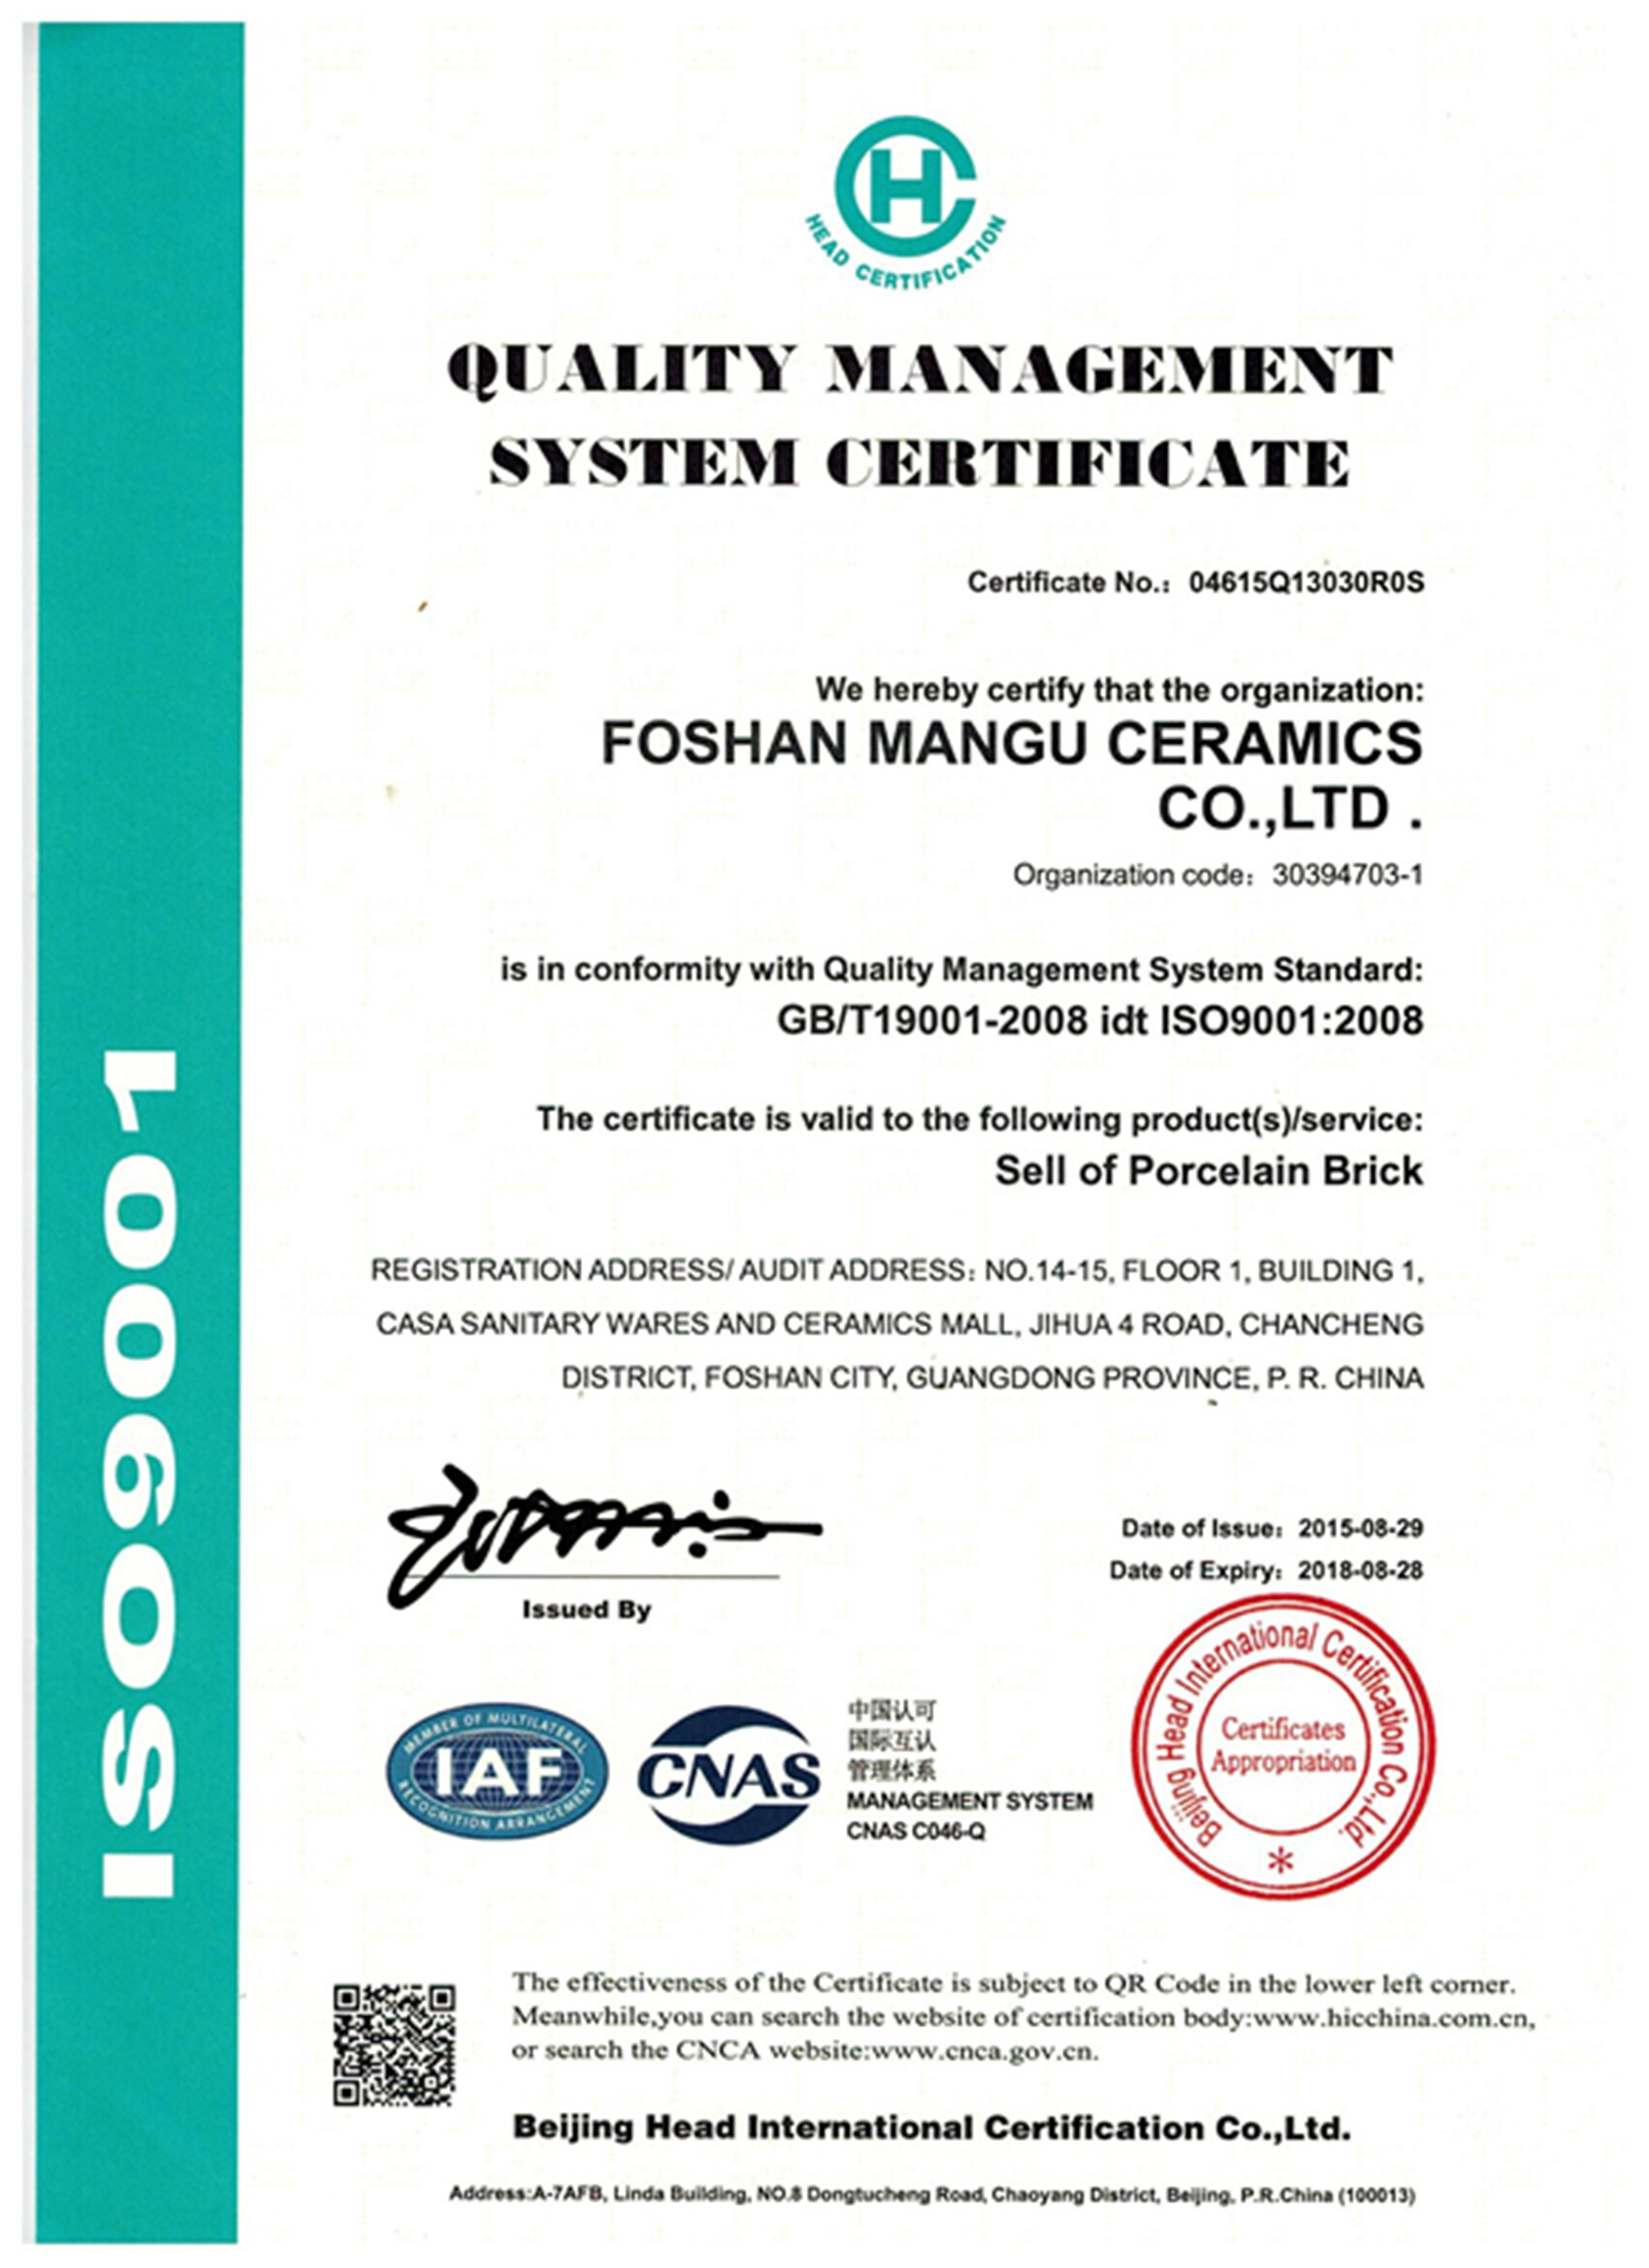 國際體系認證ISO9001